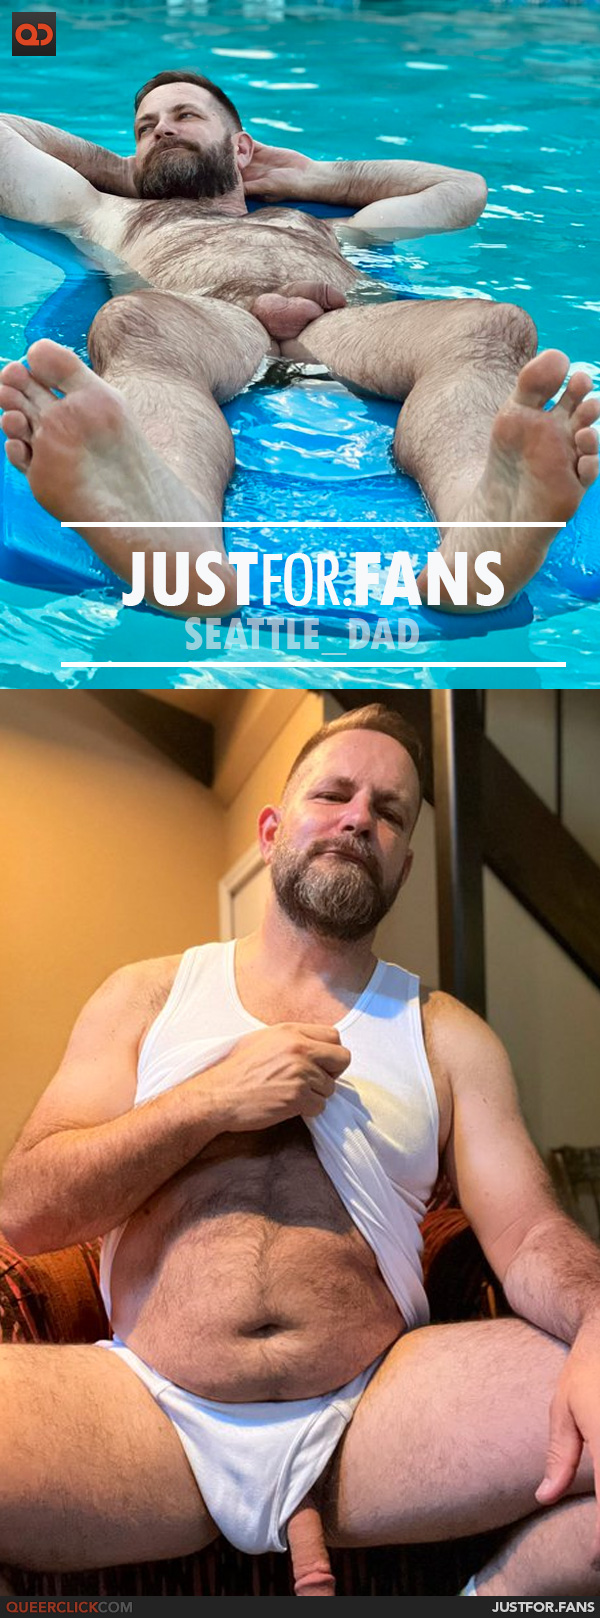 JustFor.Fans: Seattle_dad